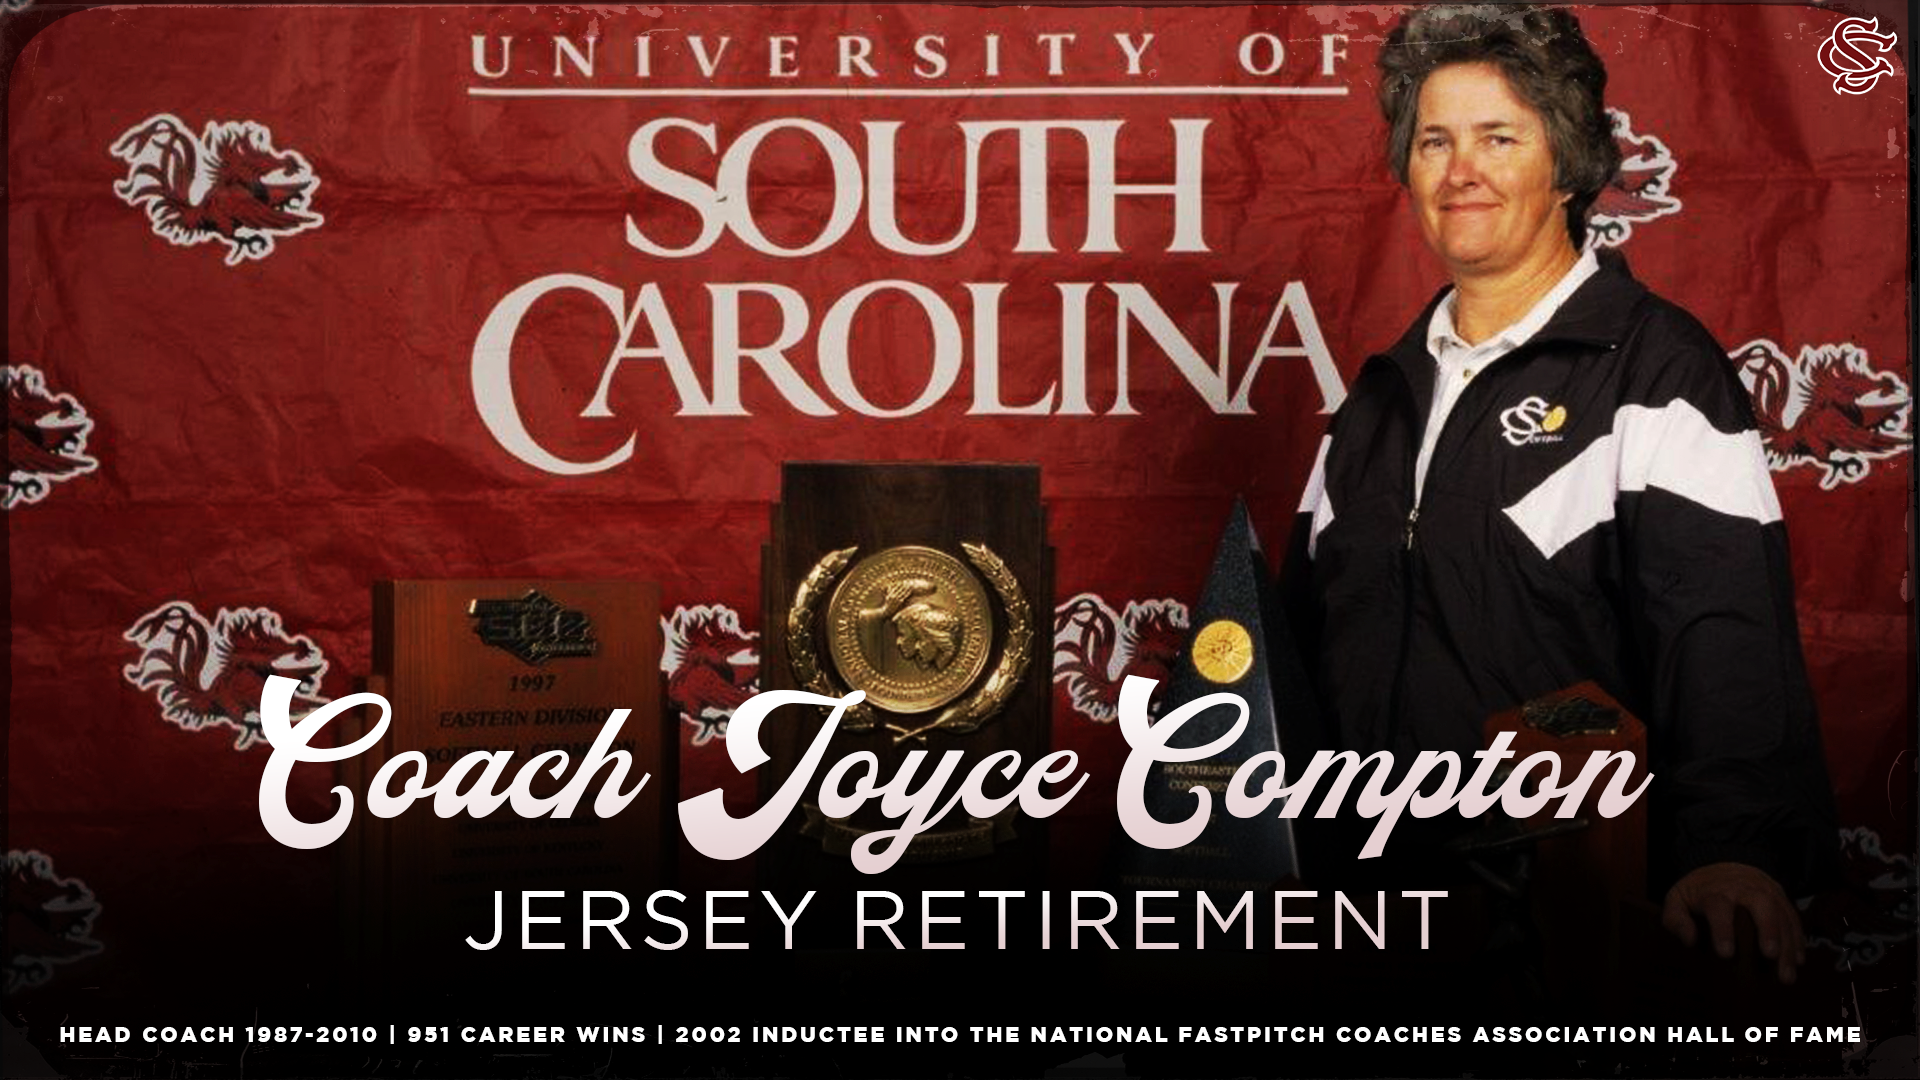 Softball to Retire Jersey of Winningest Head Coach Joyce Compton